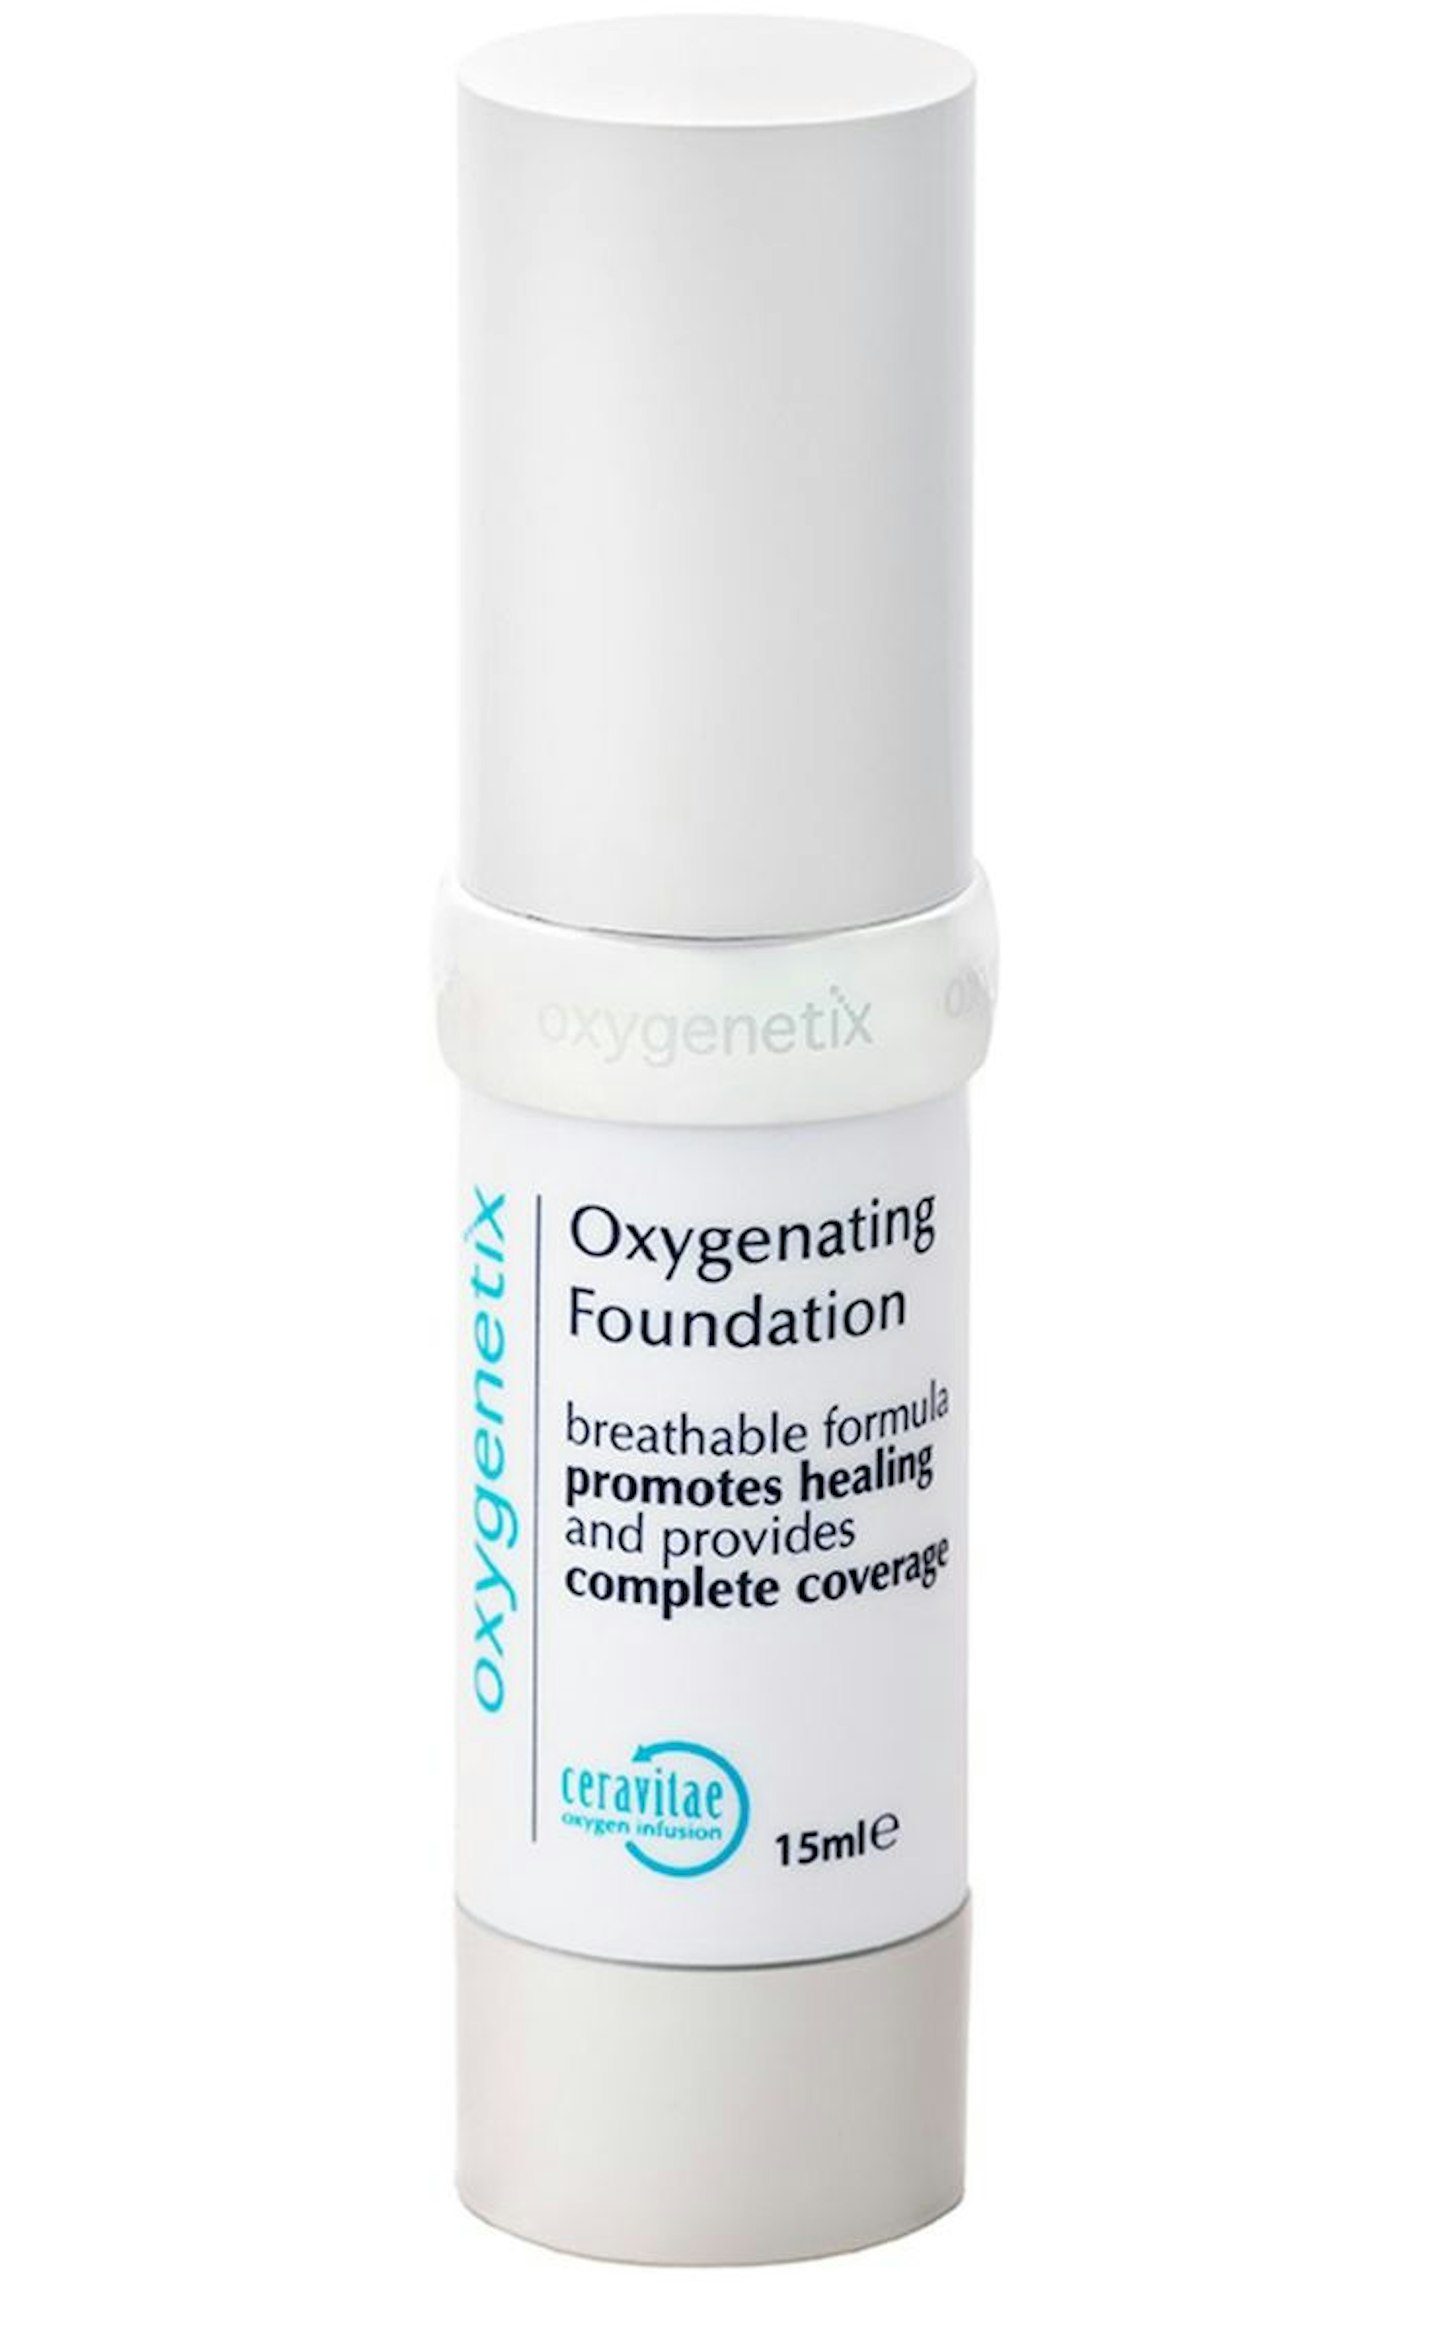 Best foundation for dry skin